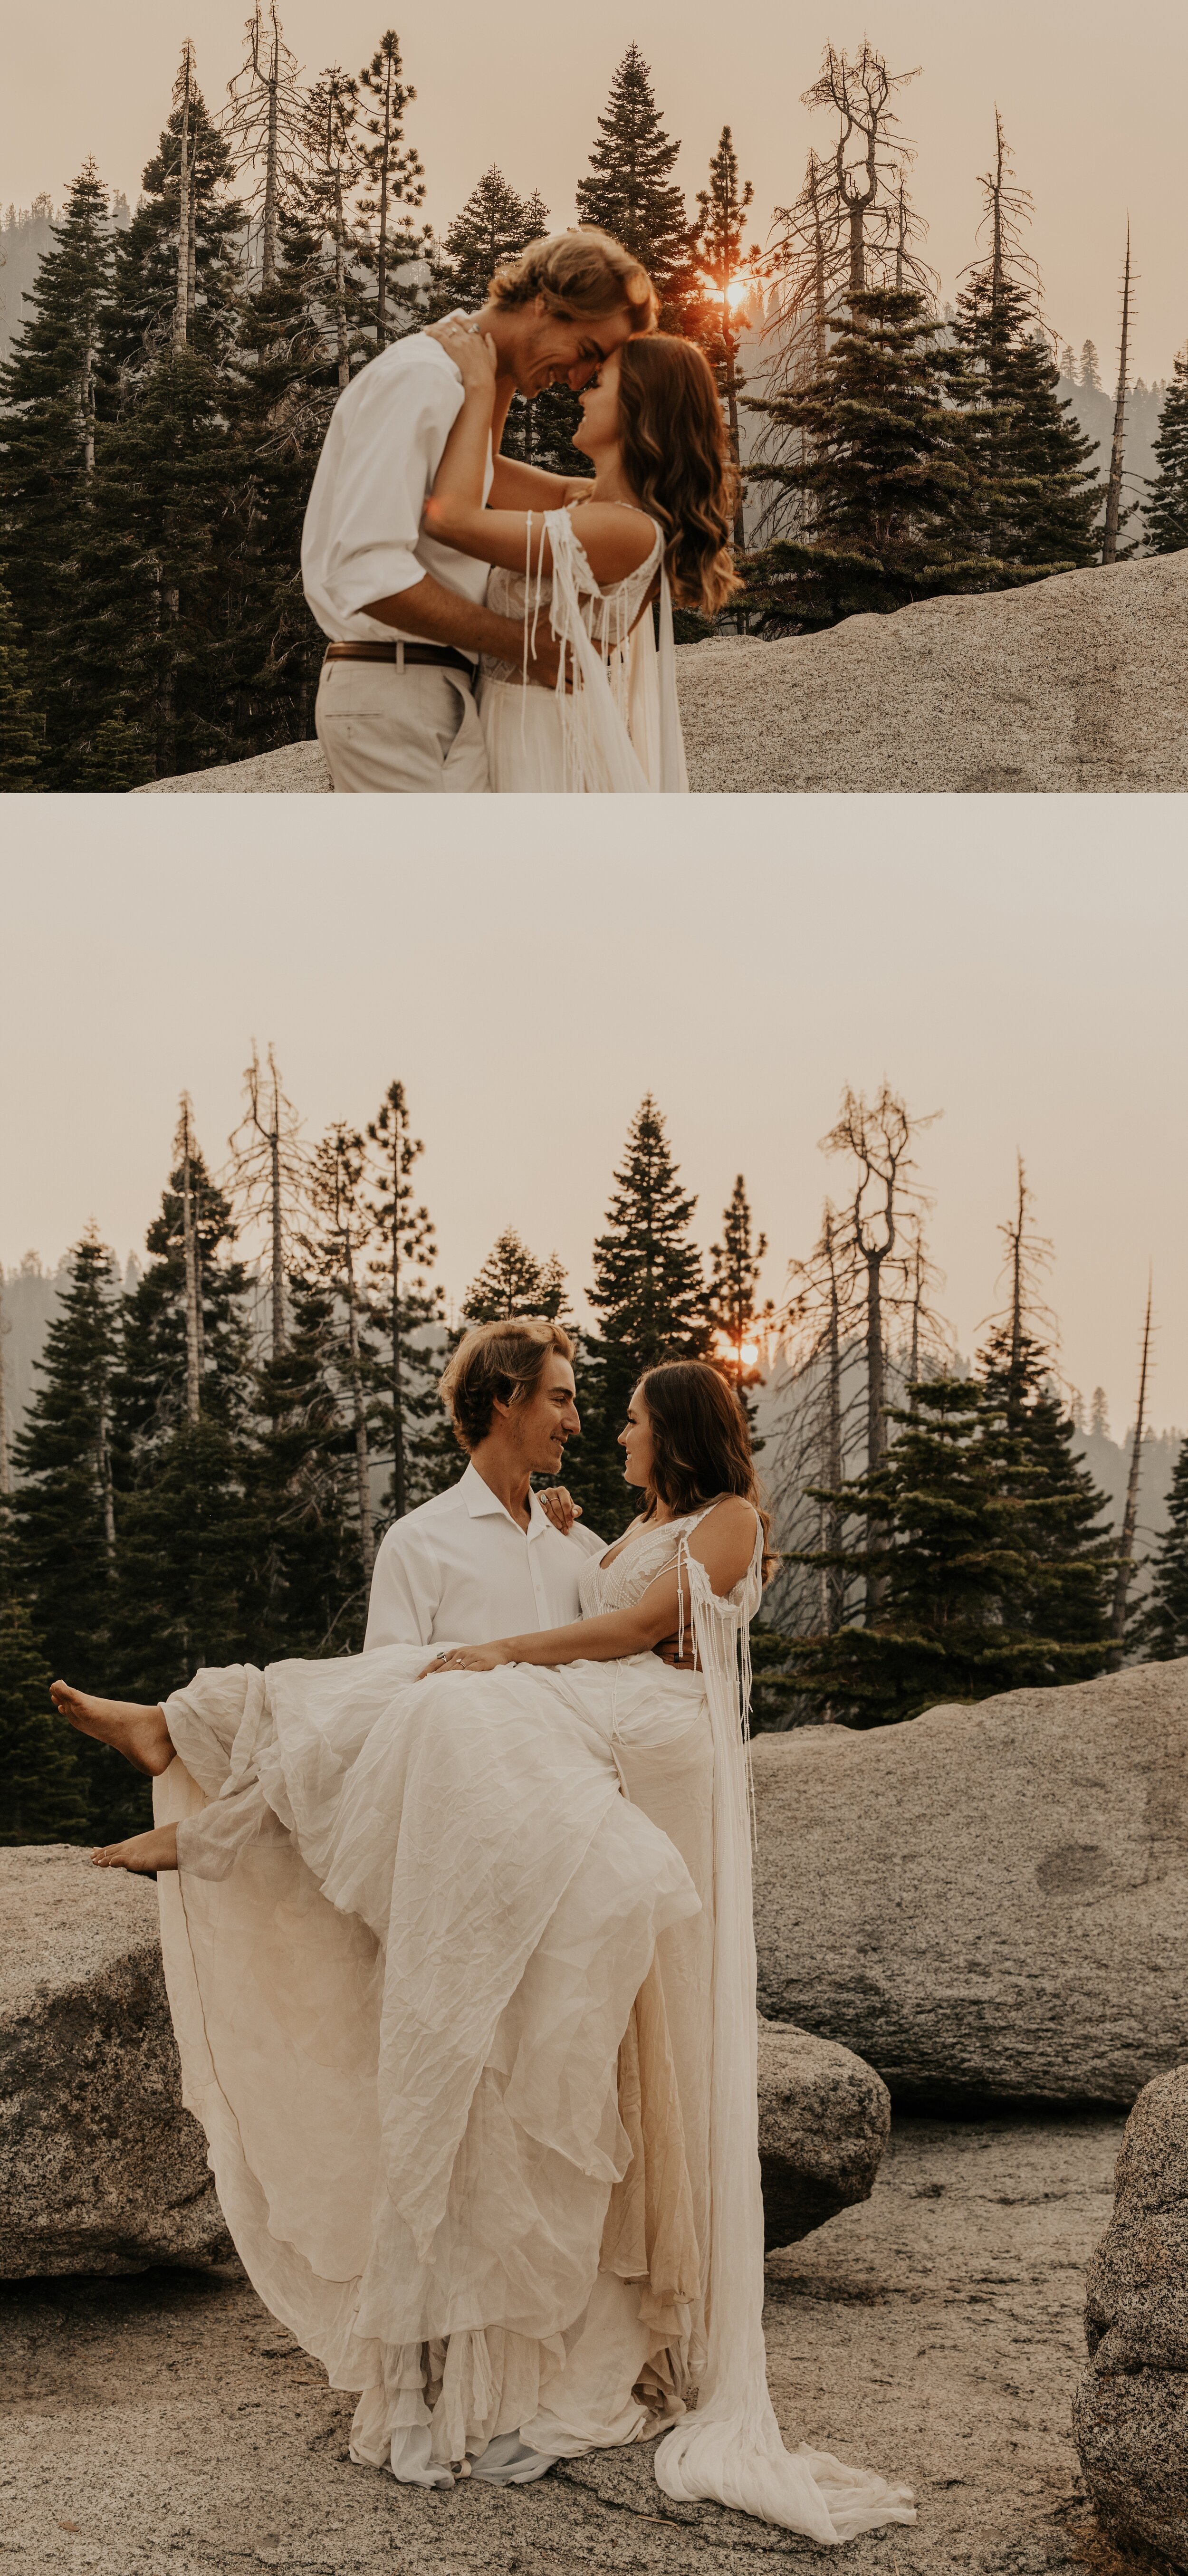 jessika-christine-photography-yosemite-couples-outdoor-adventurous-session (15).jpg